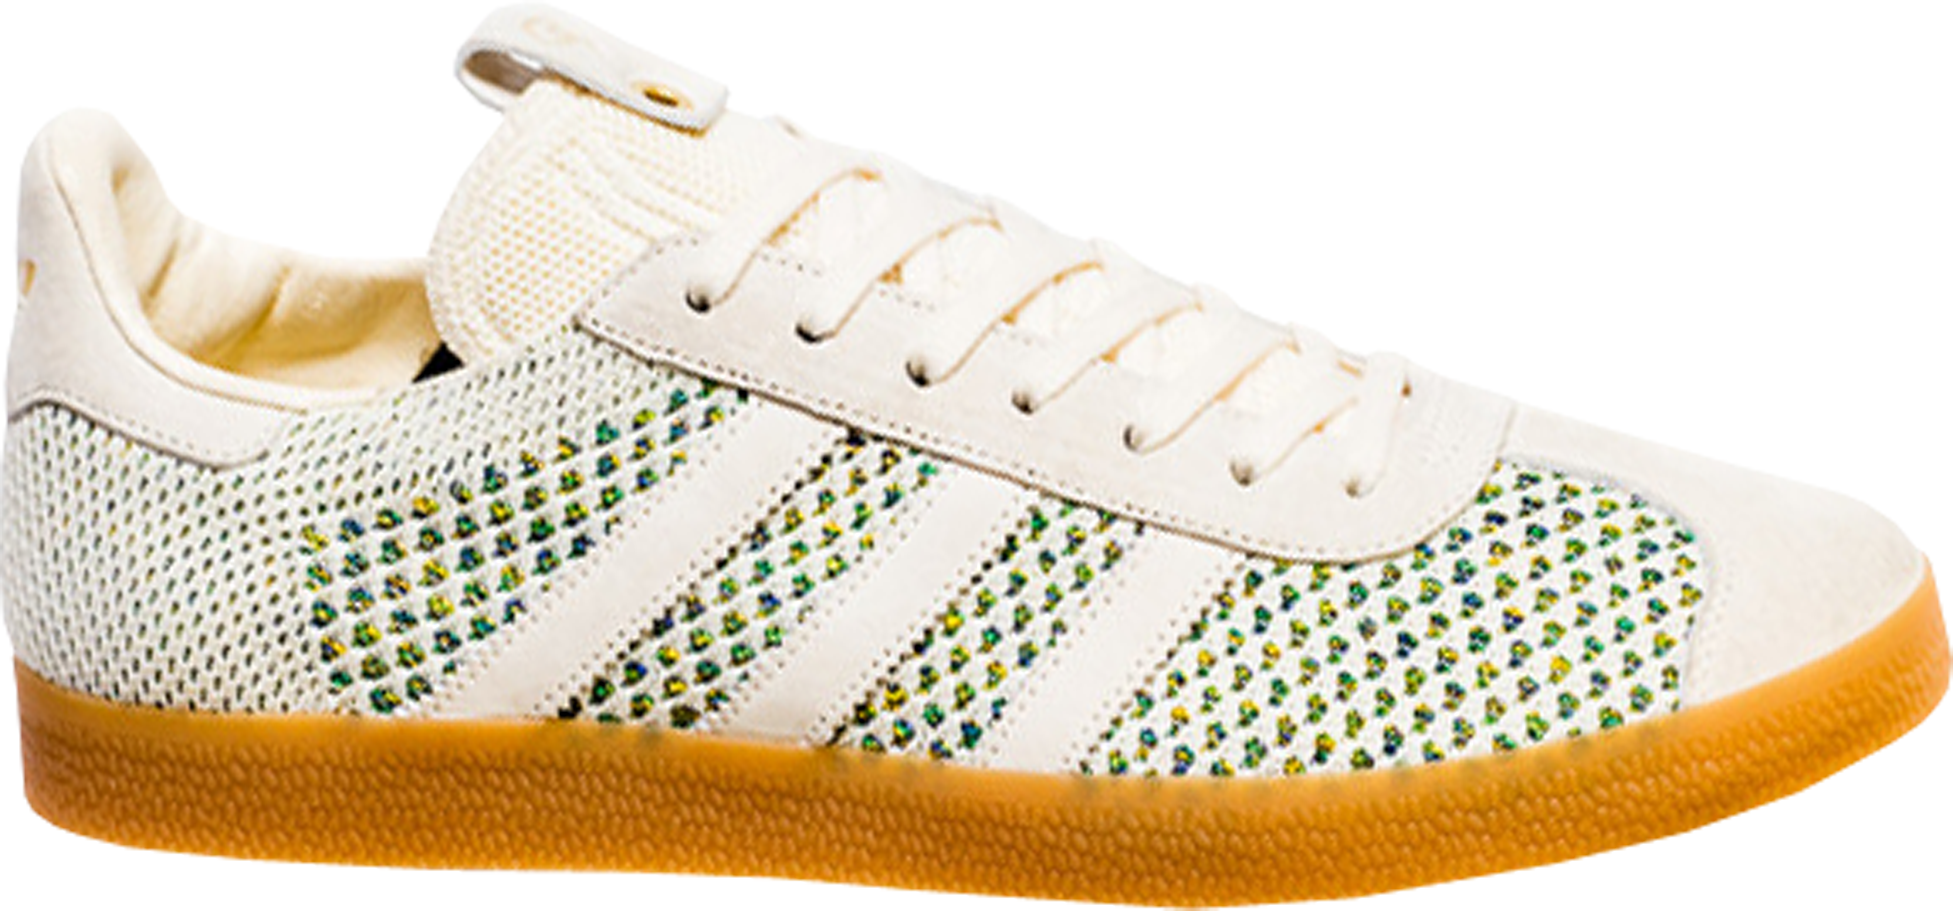 adidas gazelle x sneaker politics